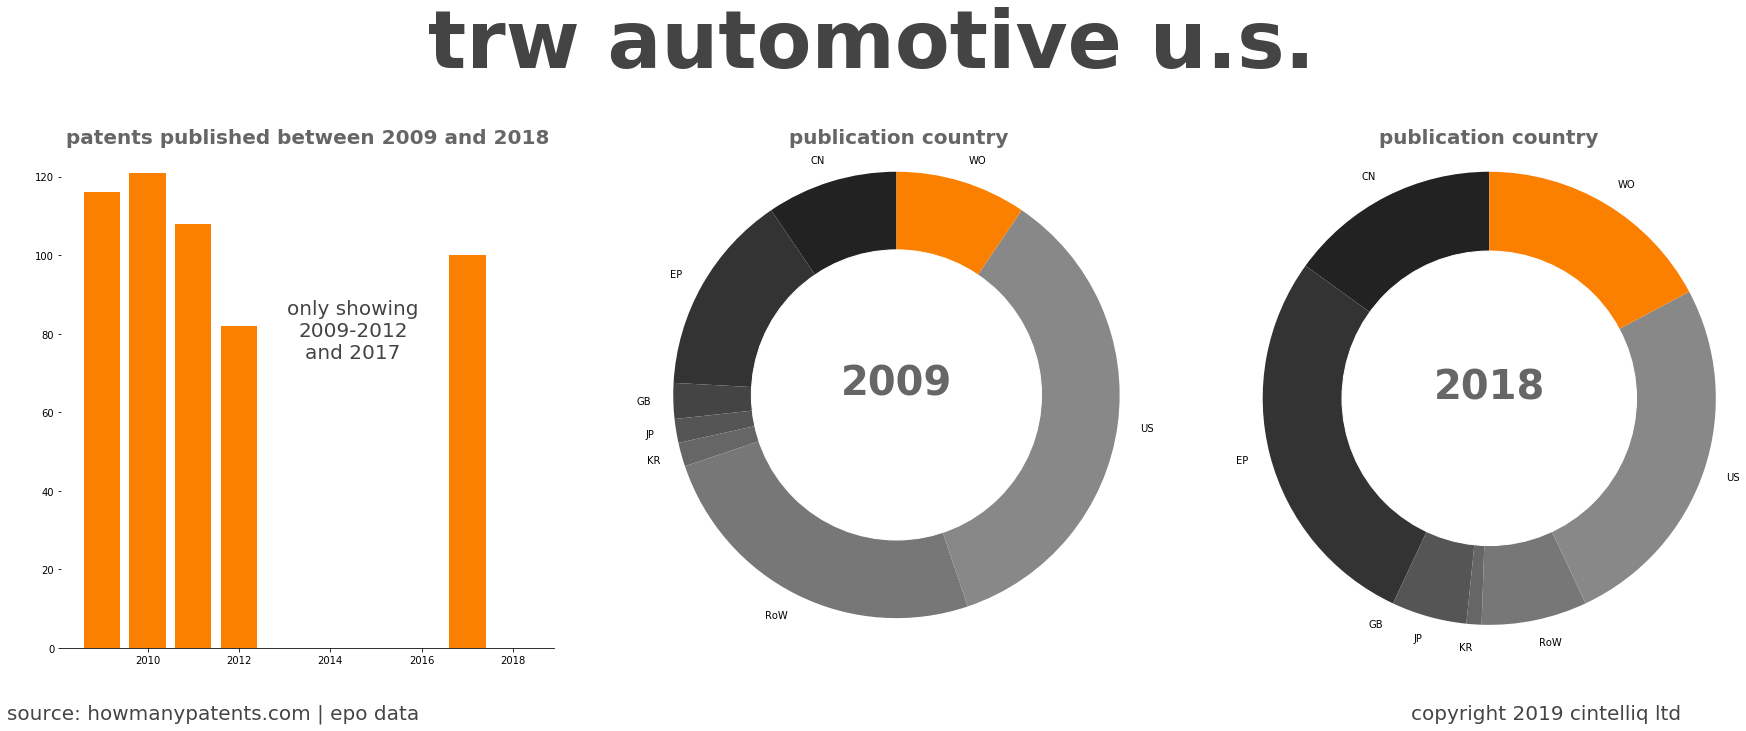 summary of patents for Trw Automotive U.S.